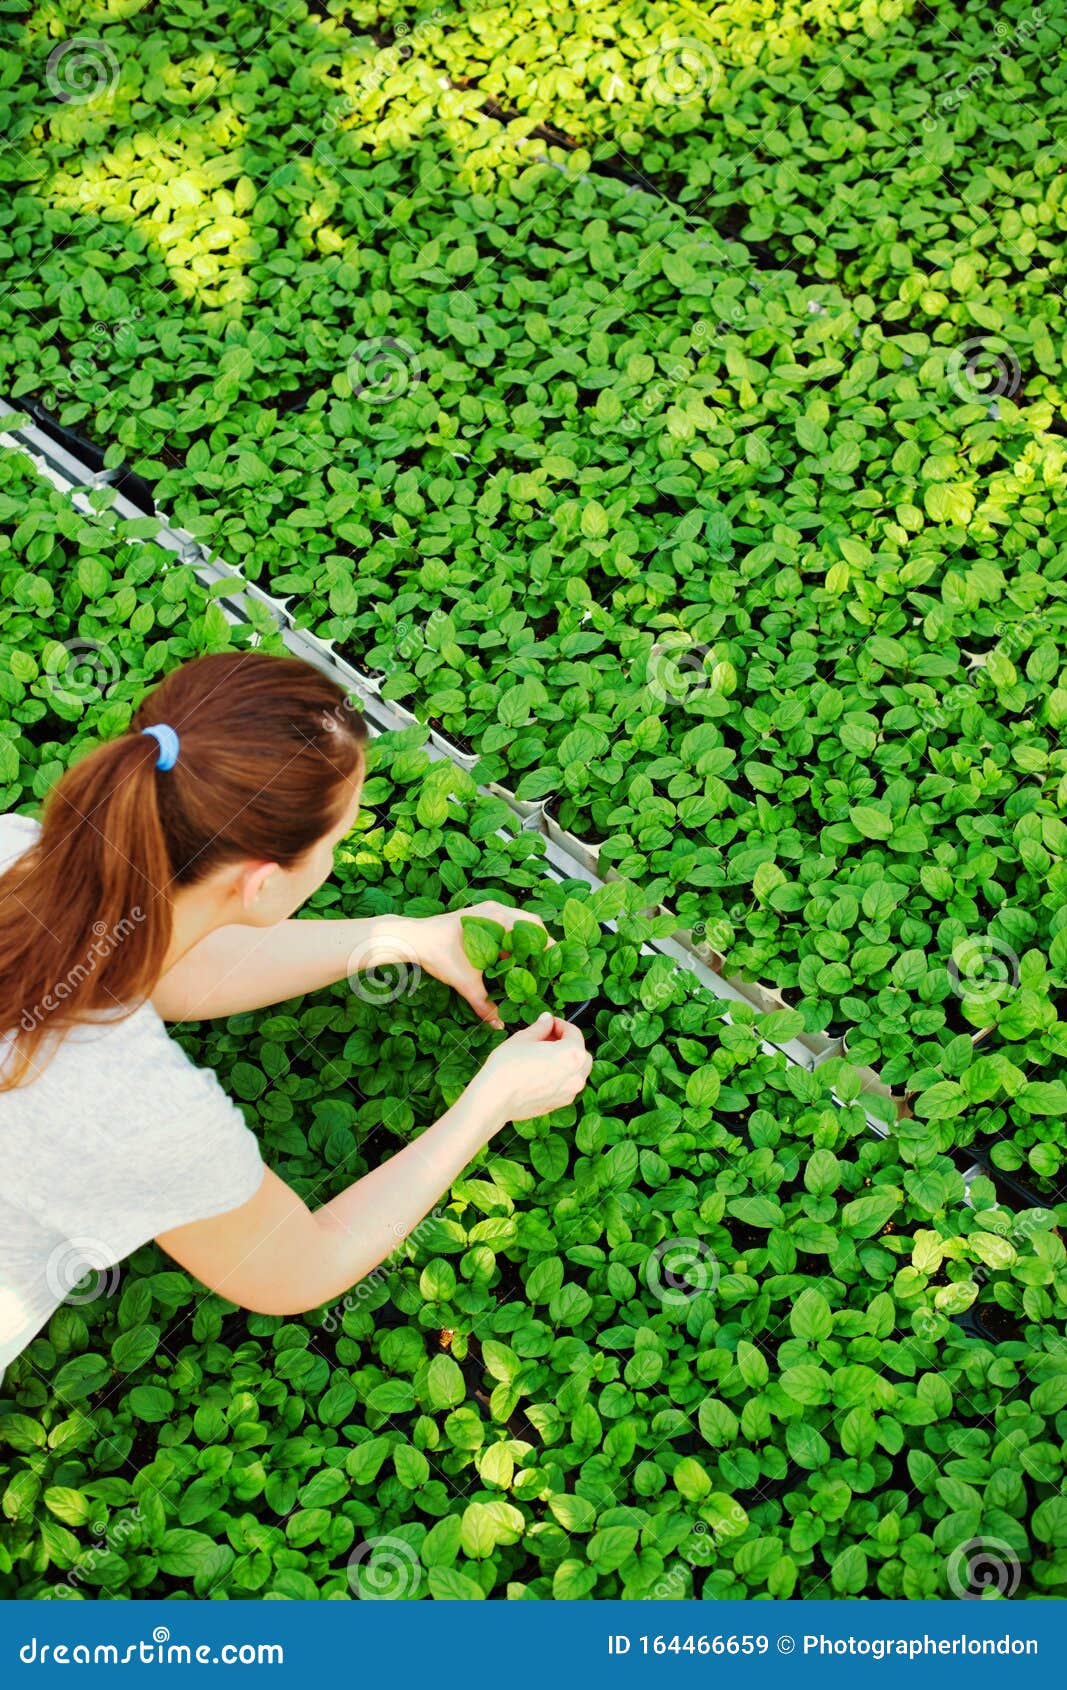 high angle view of female botanist examining seedlings in plant nursery